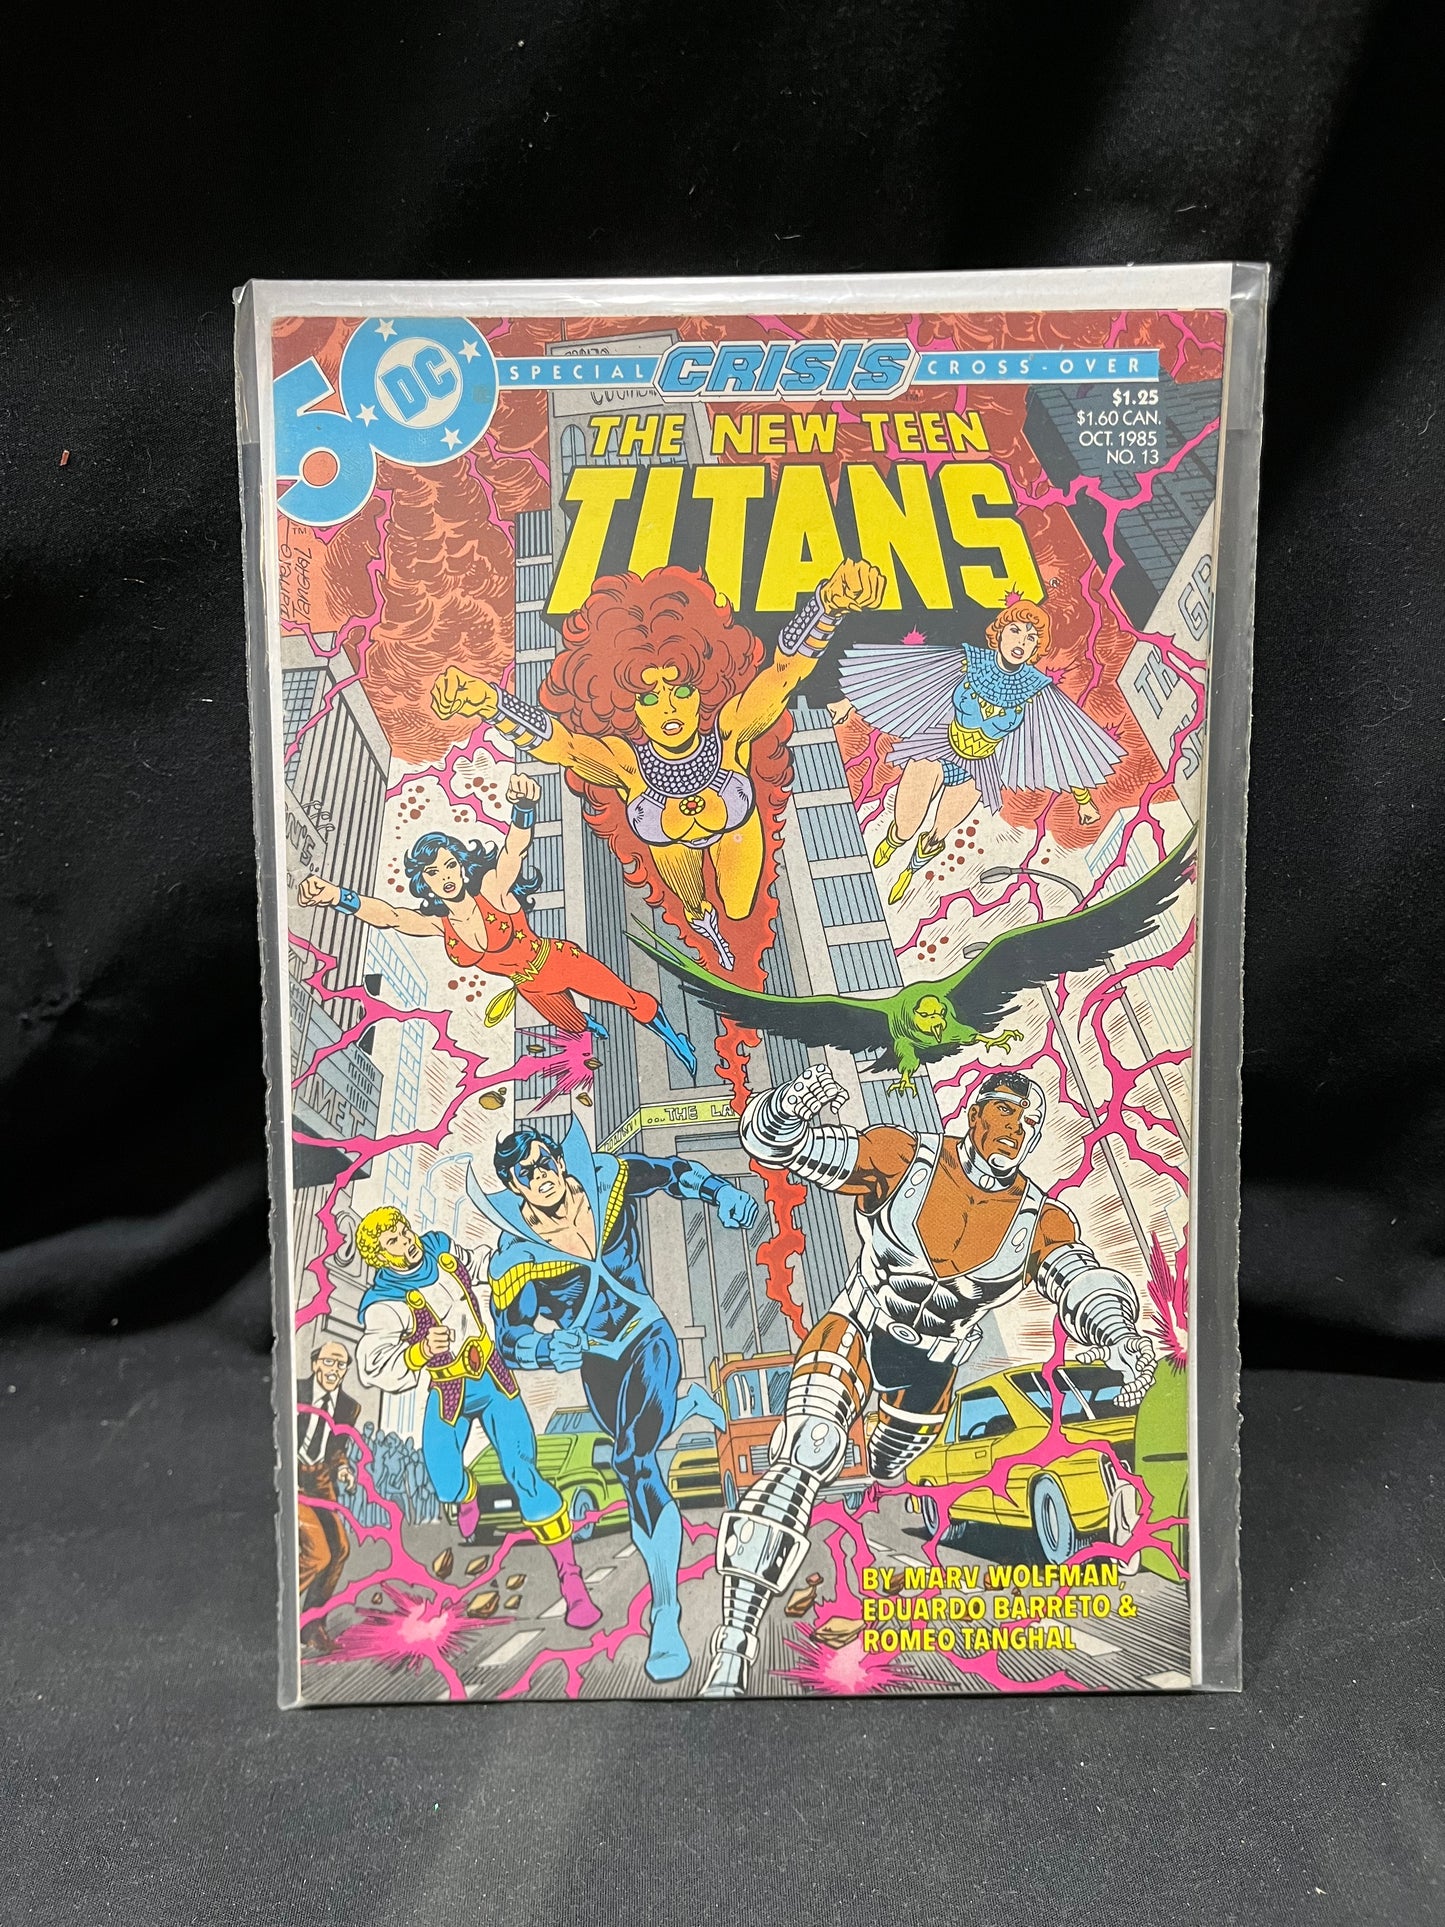 The New Teen Titans Comic Book - No. 13 Special Crisis Cross-Over